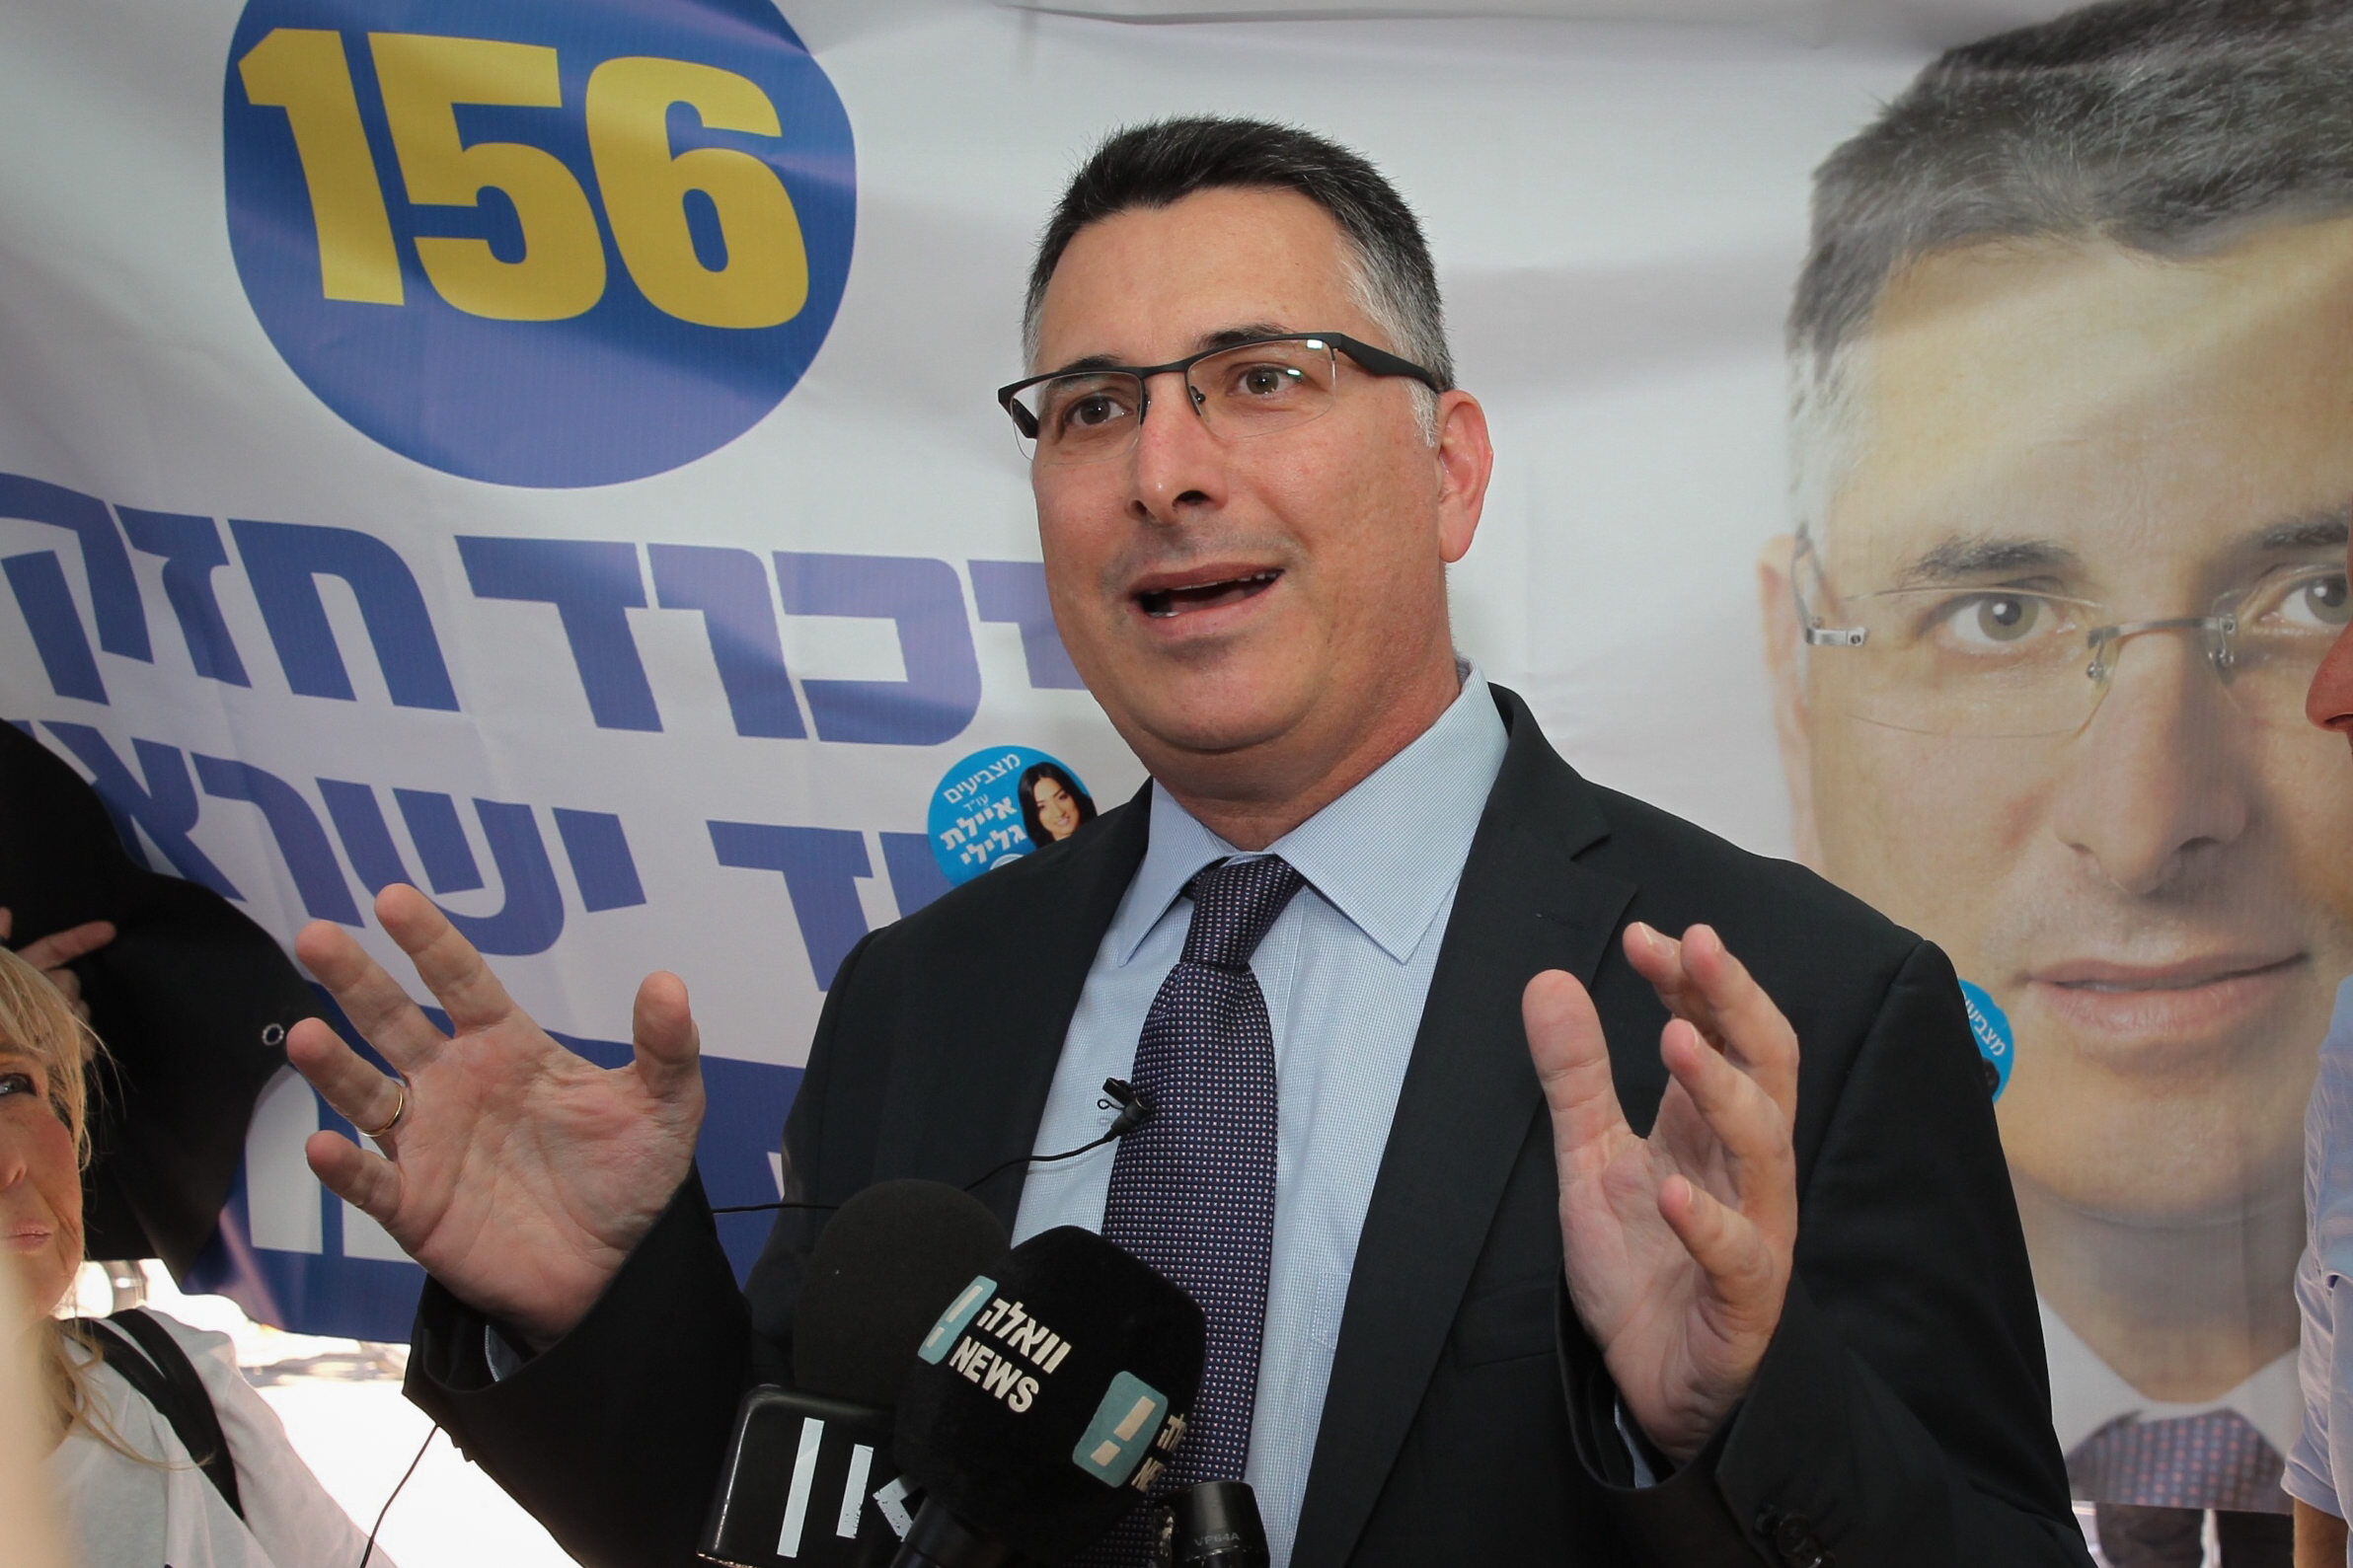 Gideon Saar, former Minister of Interior Affairs speaks with the media outside the Tel Aviv Likud polling station on February 5, 2019. Flash90